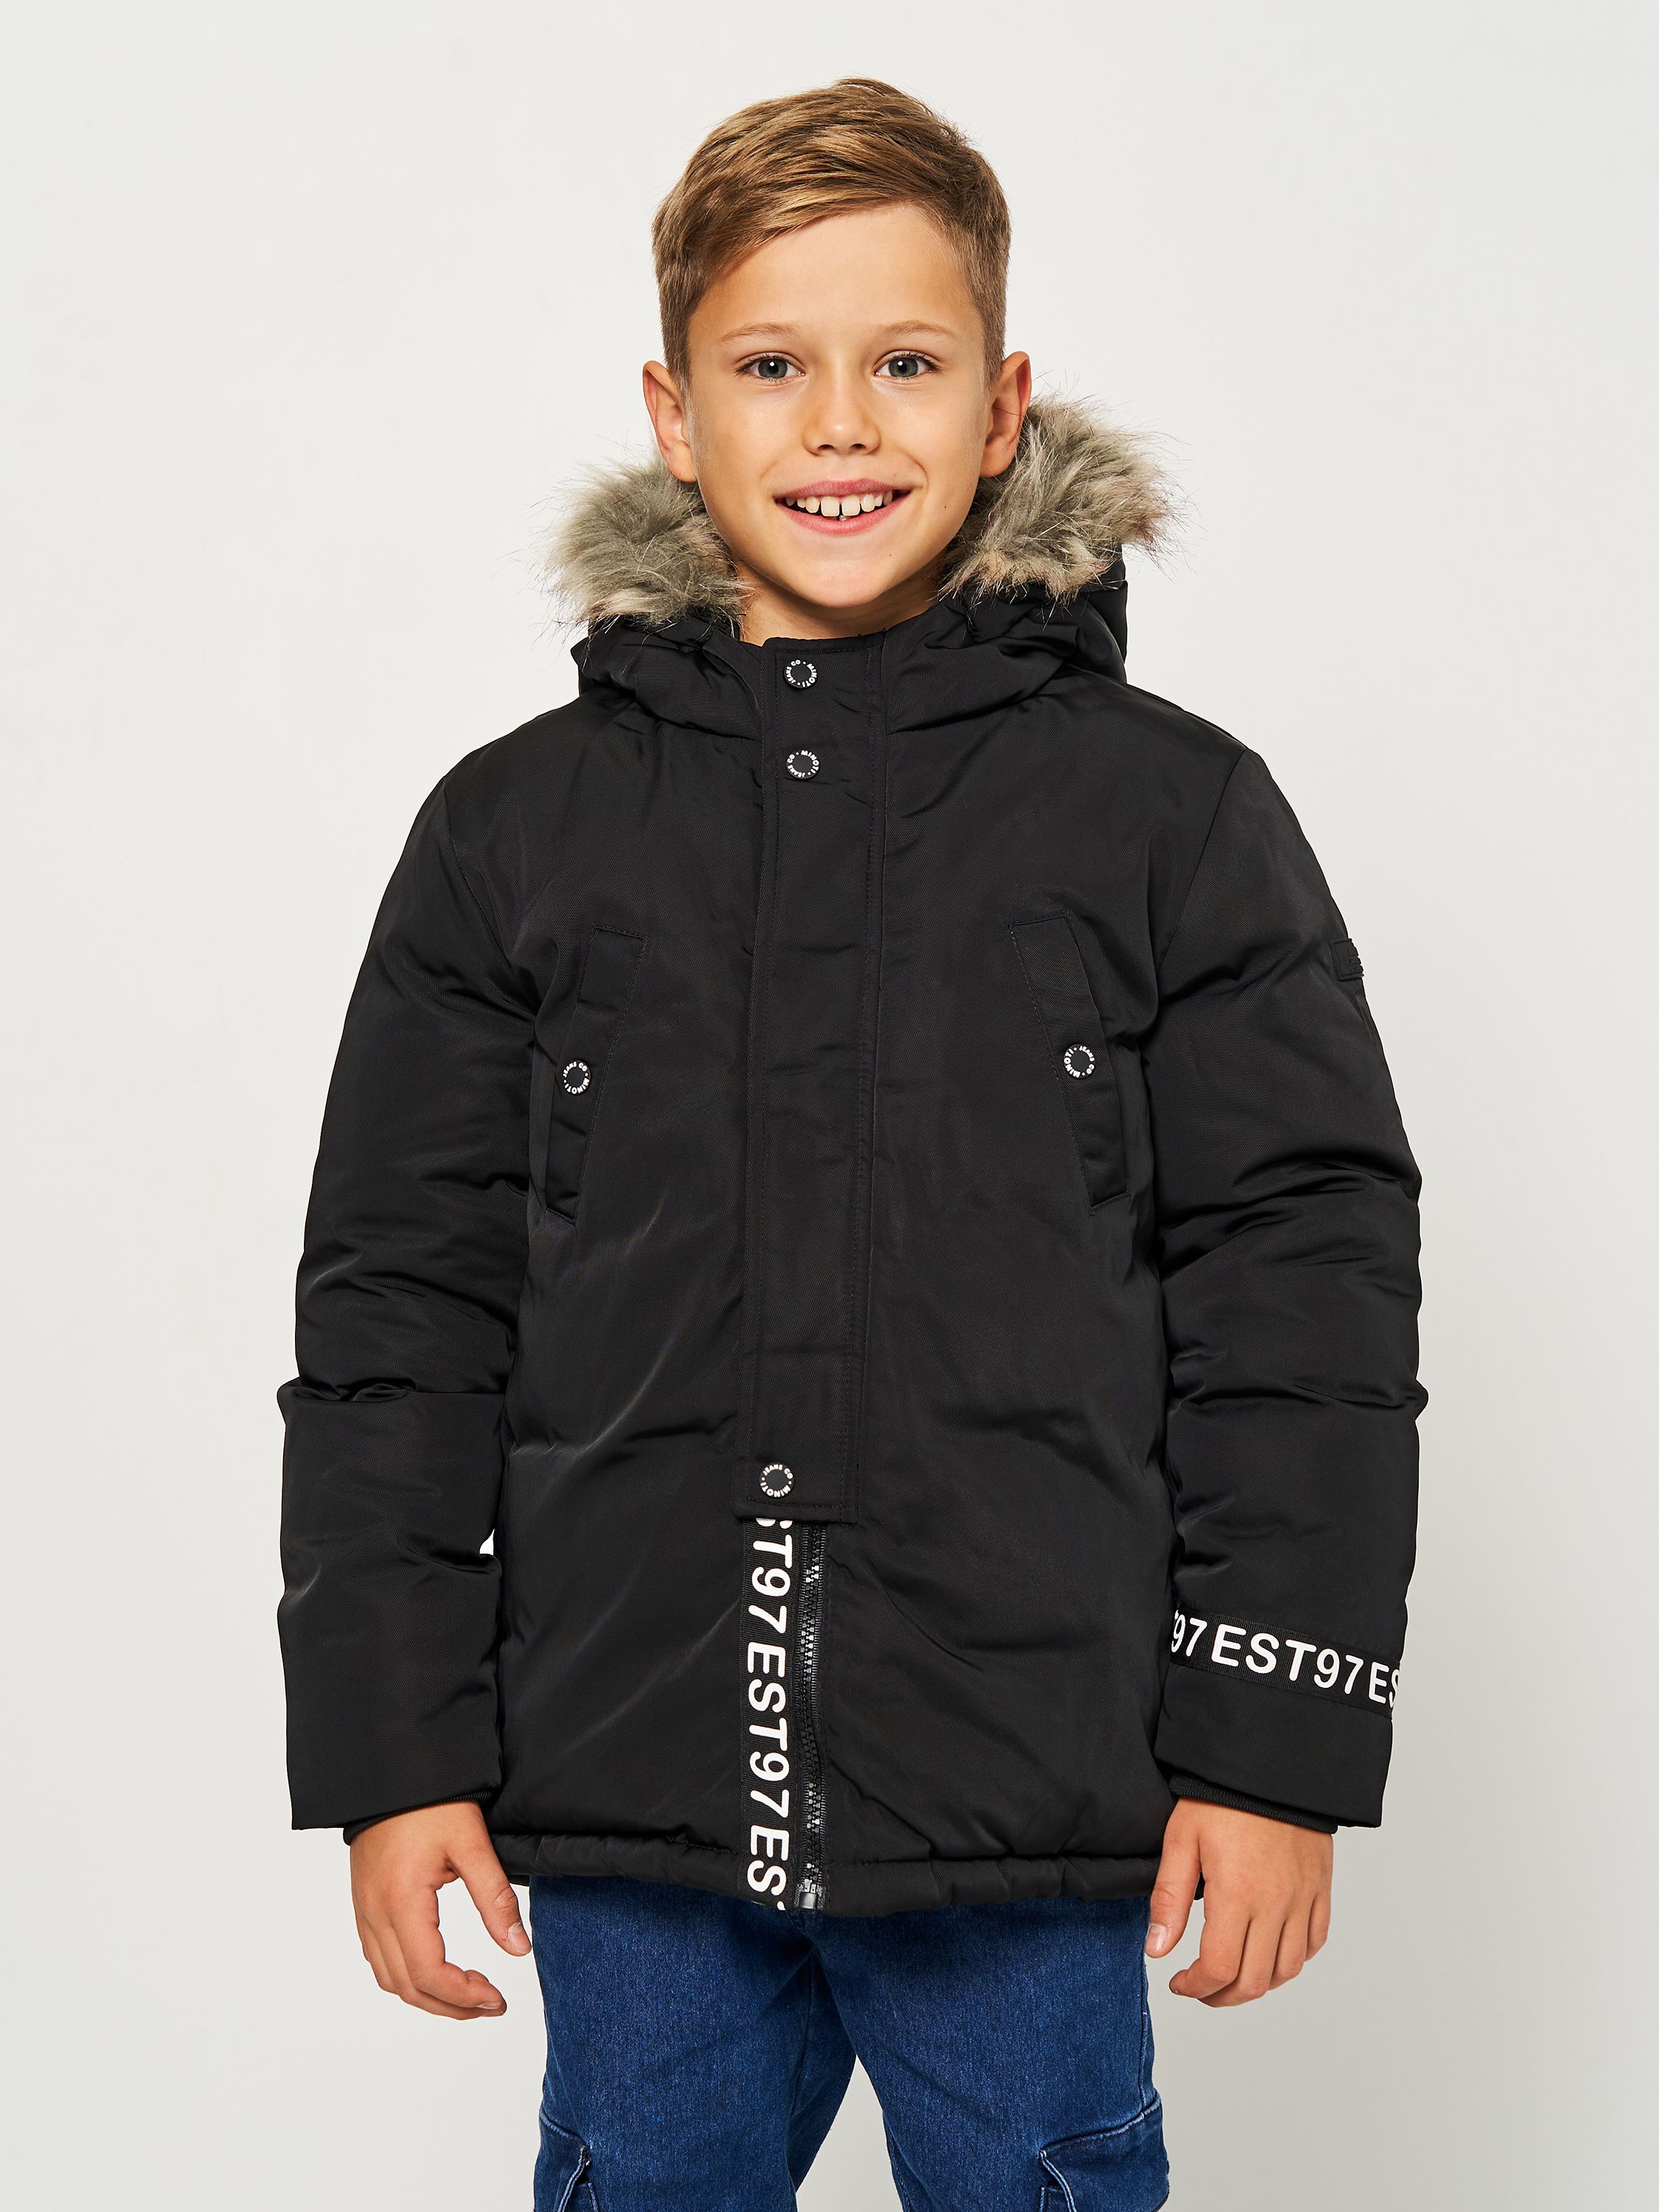 Акция на Підліткова зимова довга куртка для хлопчика Minoti 15coat 47 39617TEN 134-140 см Чорна от Rozetka